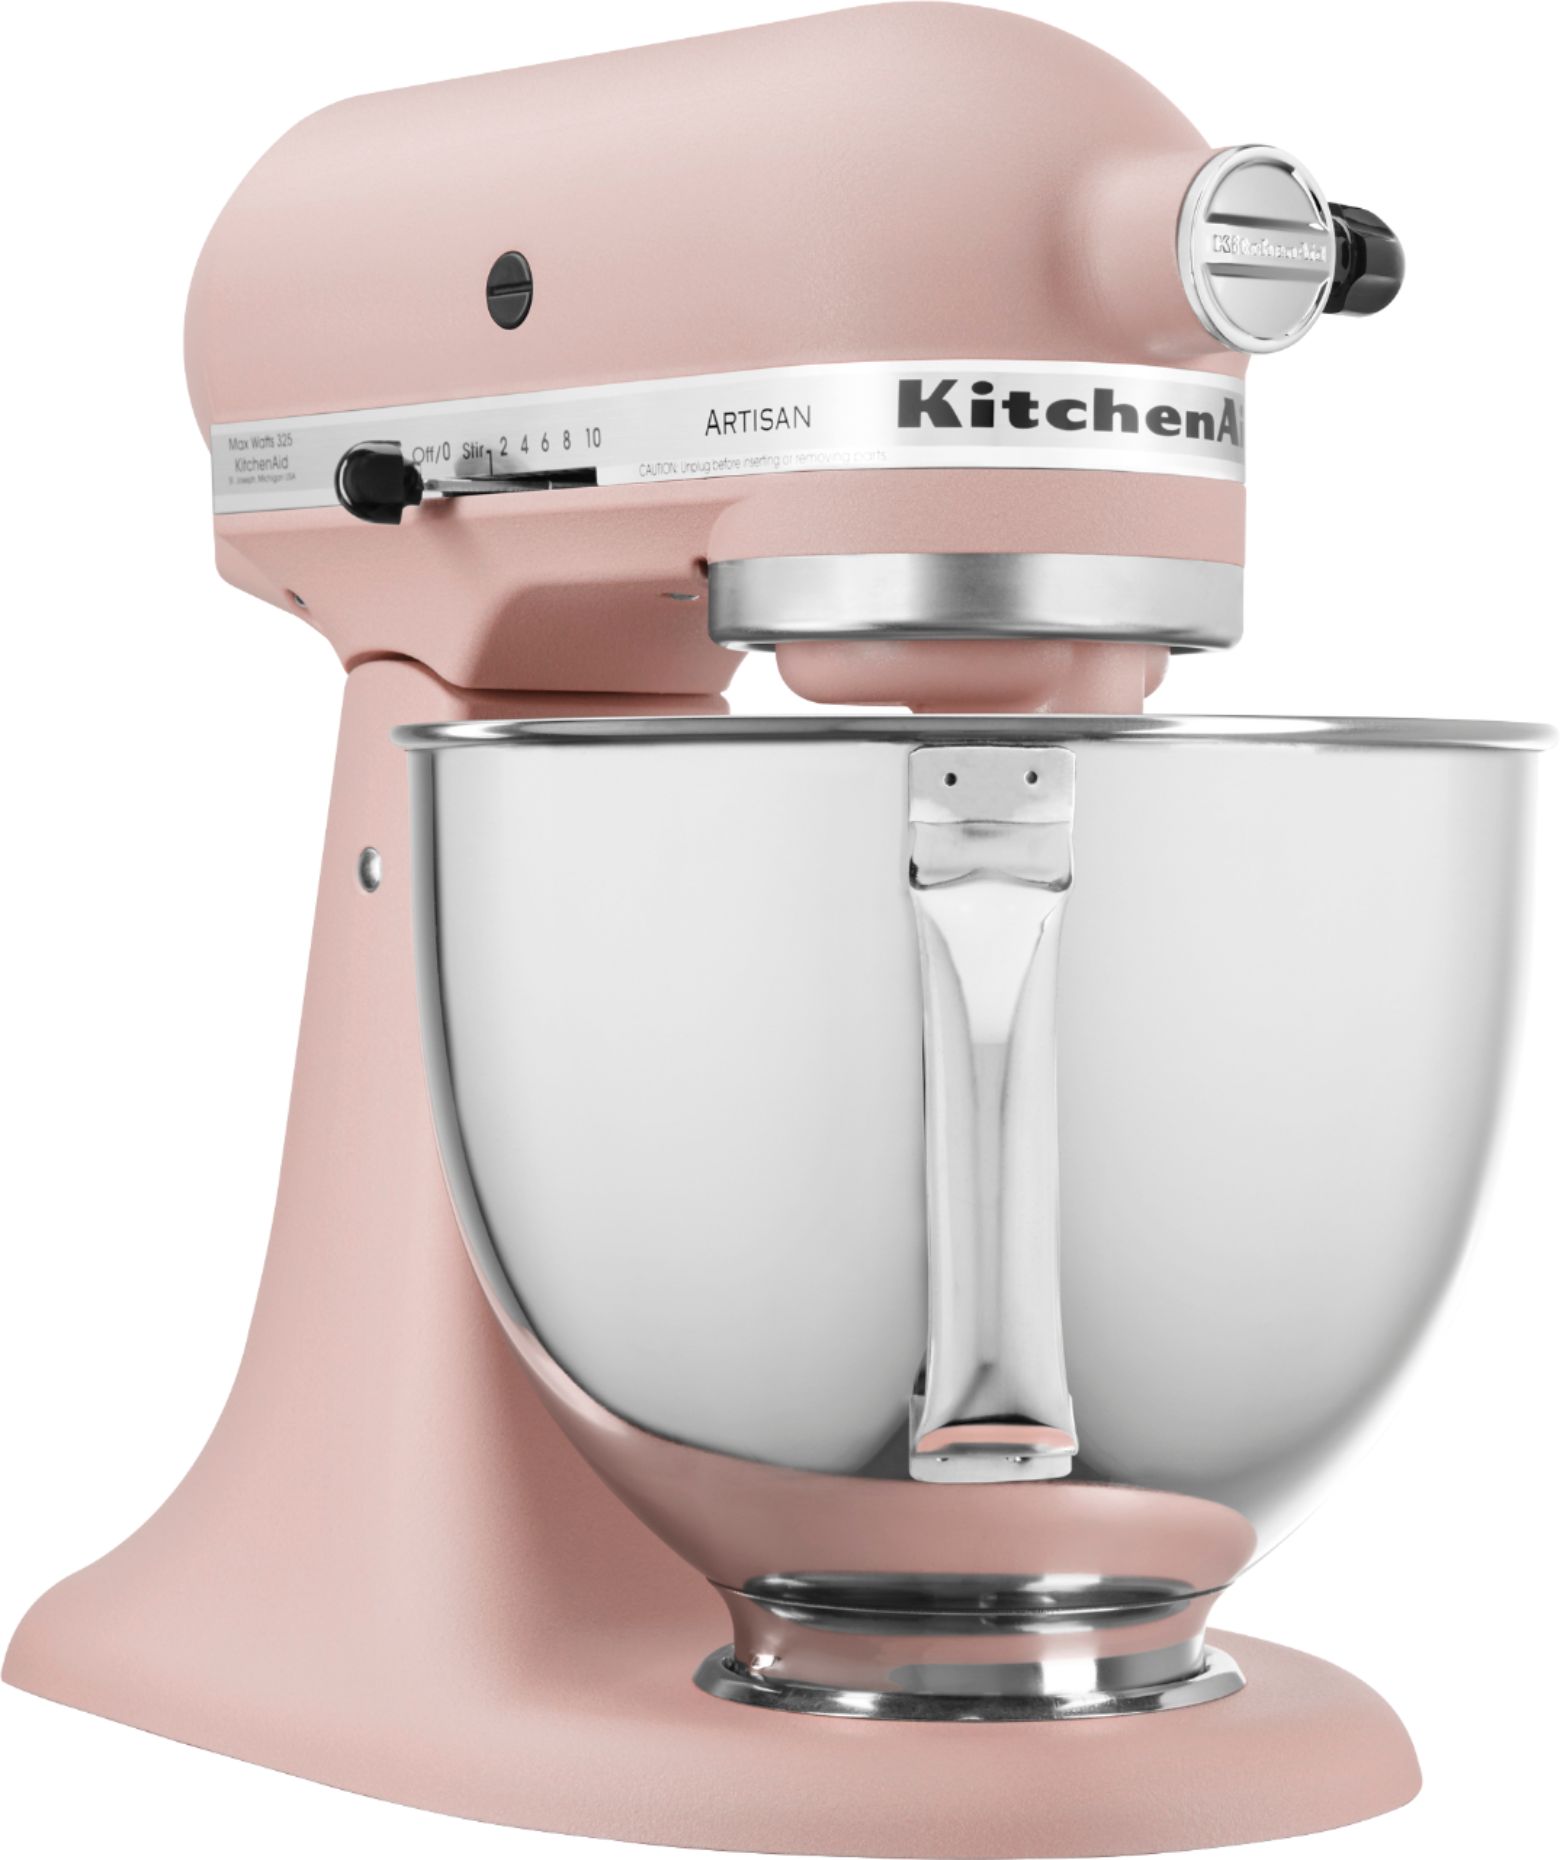 I refurbished my KitchenAid from silver to pink! It definitely isn